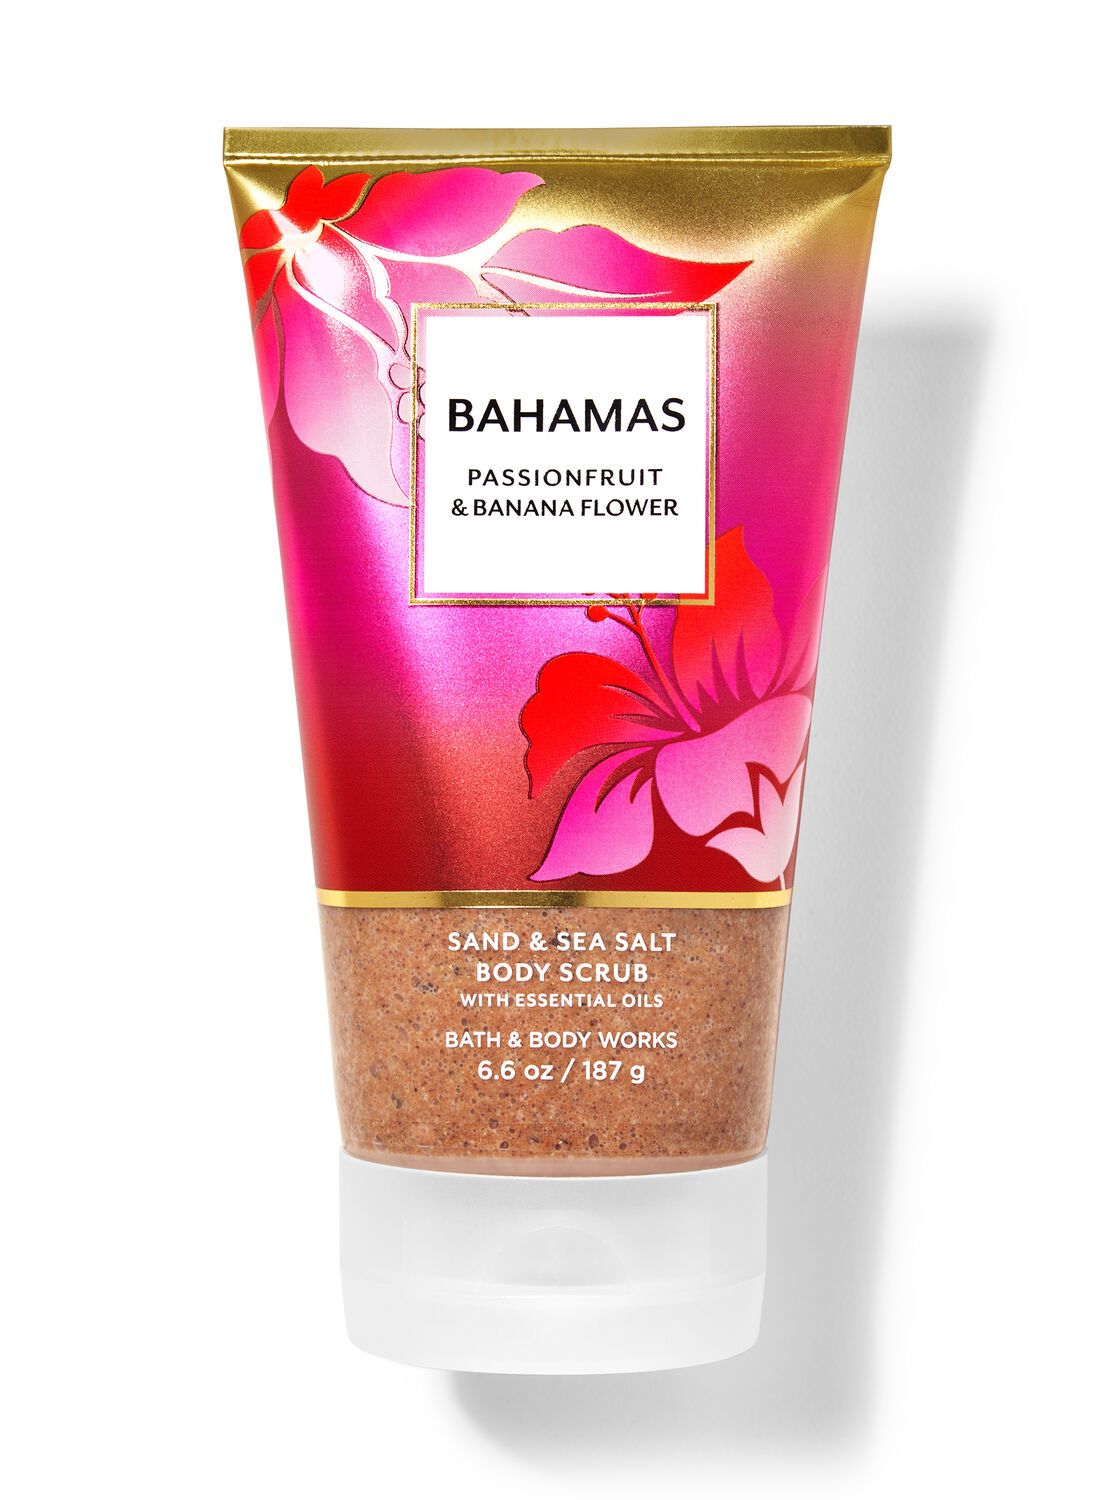 Bahamas Passionfruit & Banana Flower Sand & Sea Salt Body Scrub